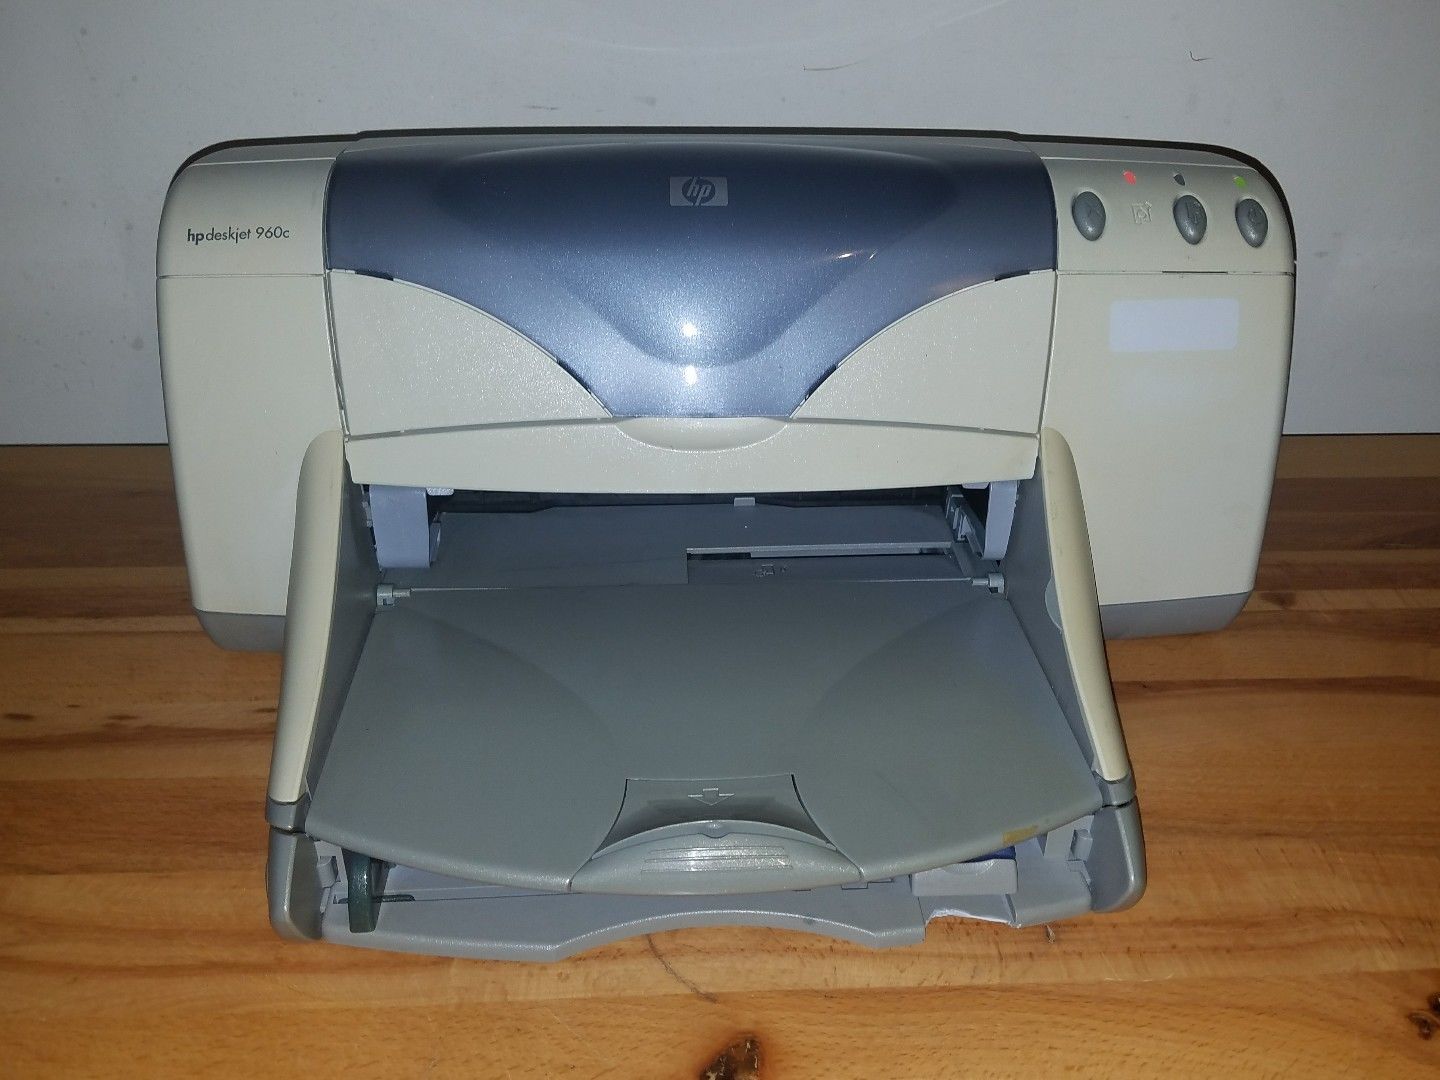 Hp deskjet 960c series printer software